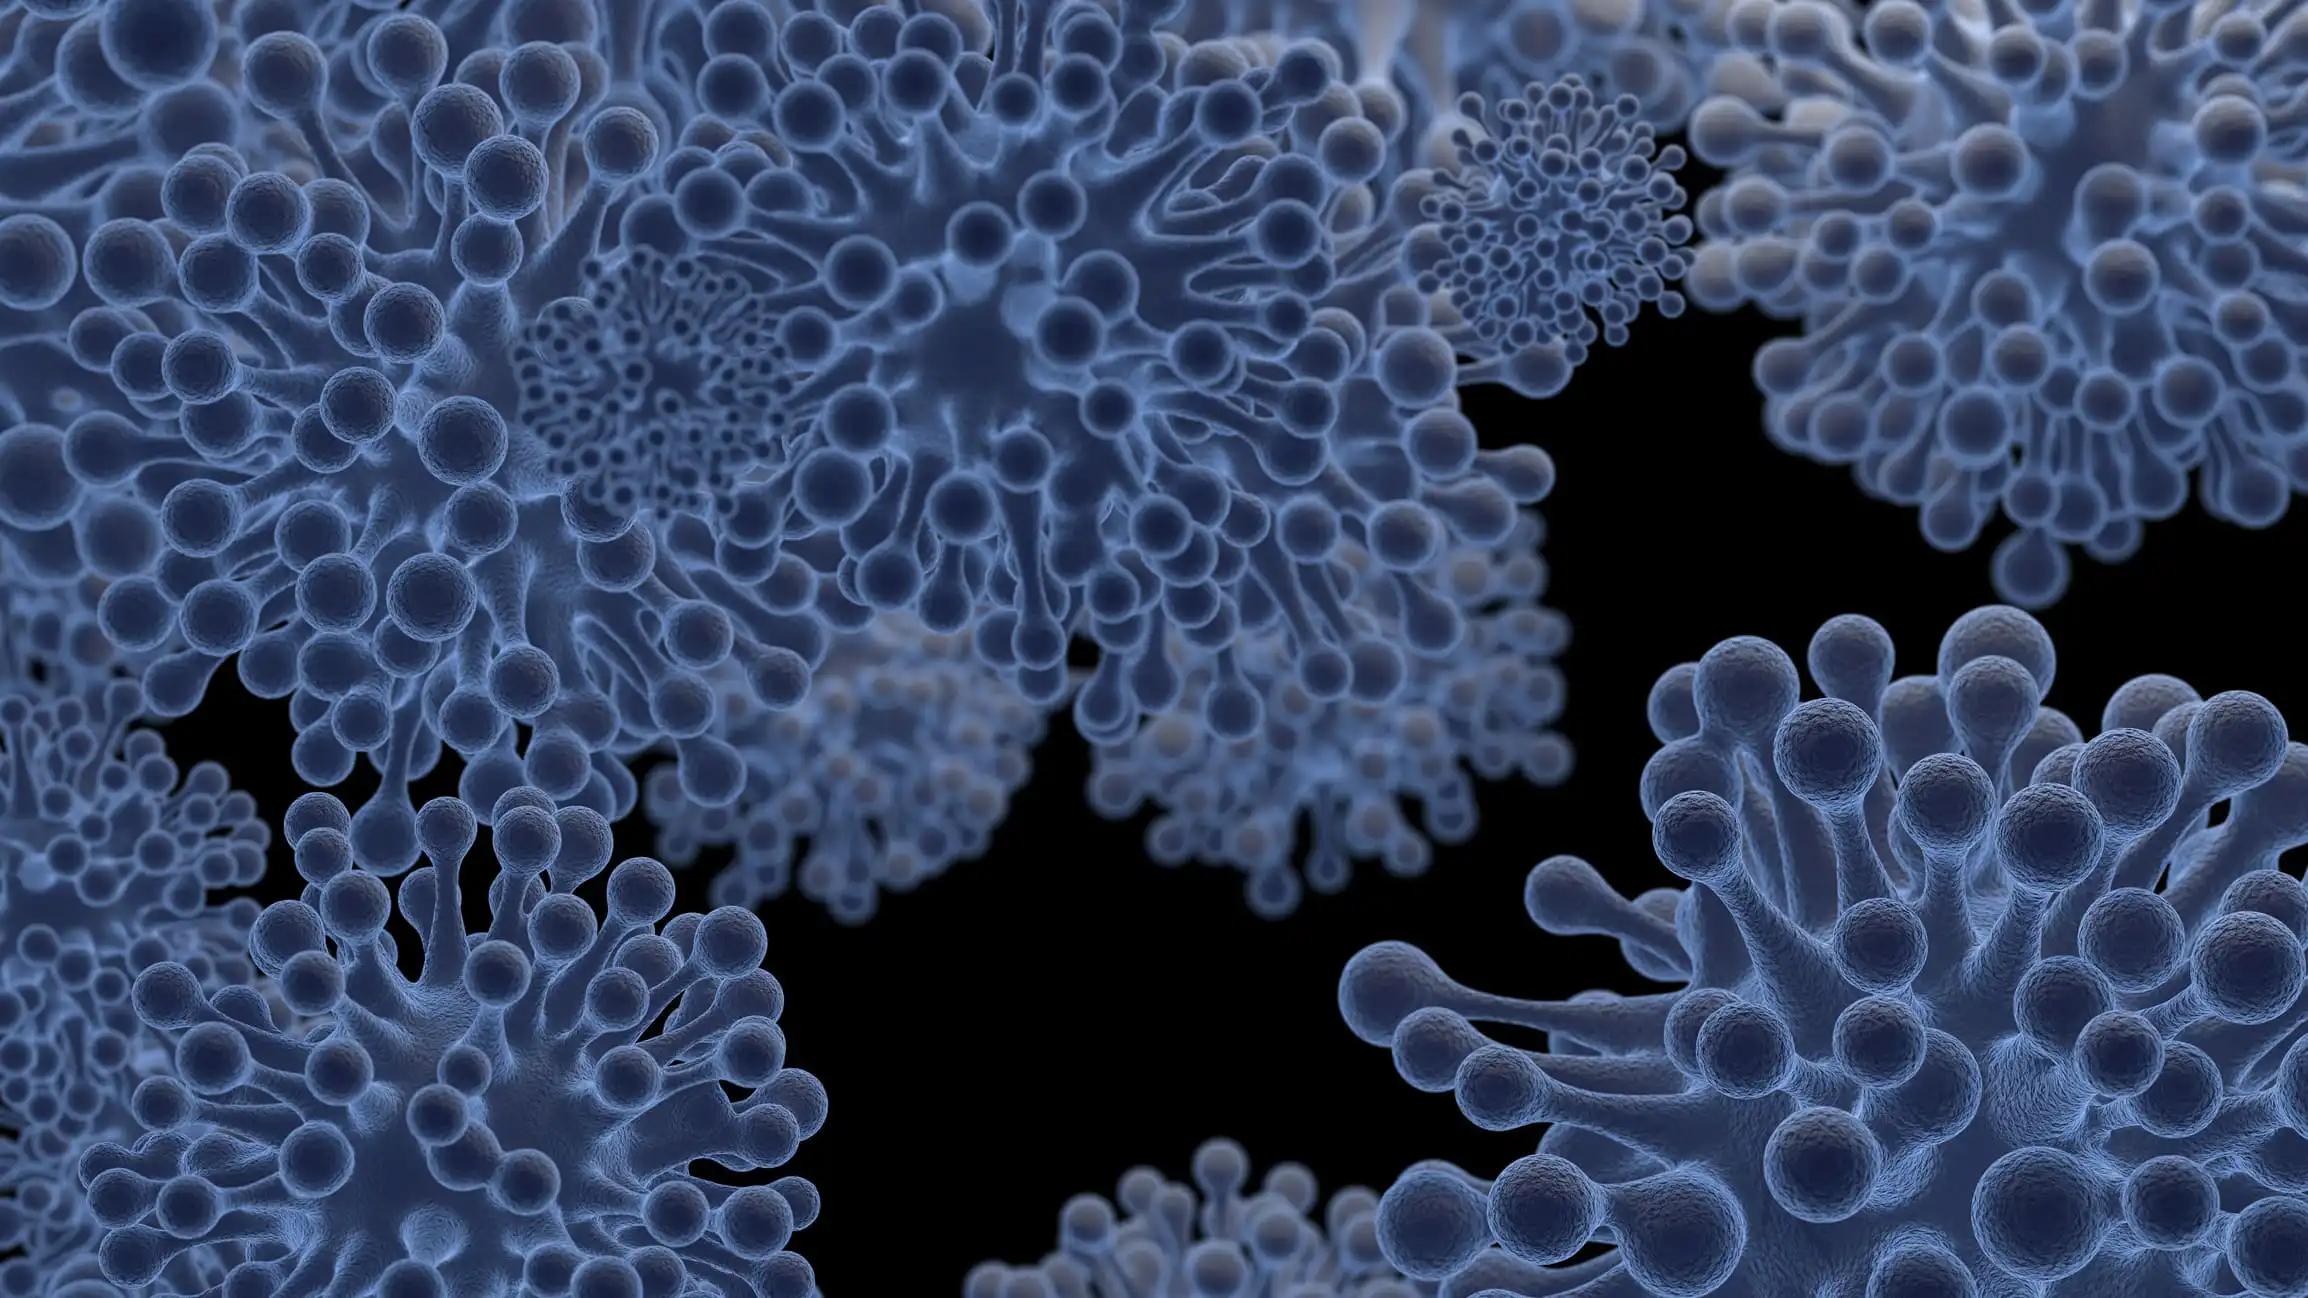 Virus Infection 3d illustration